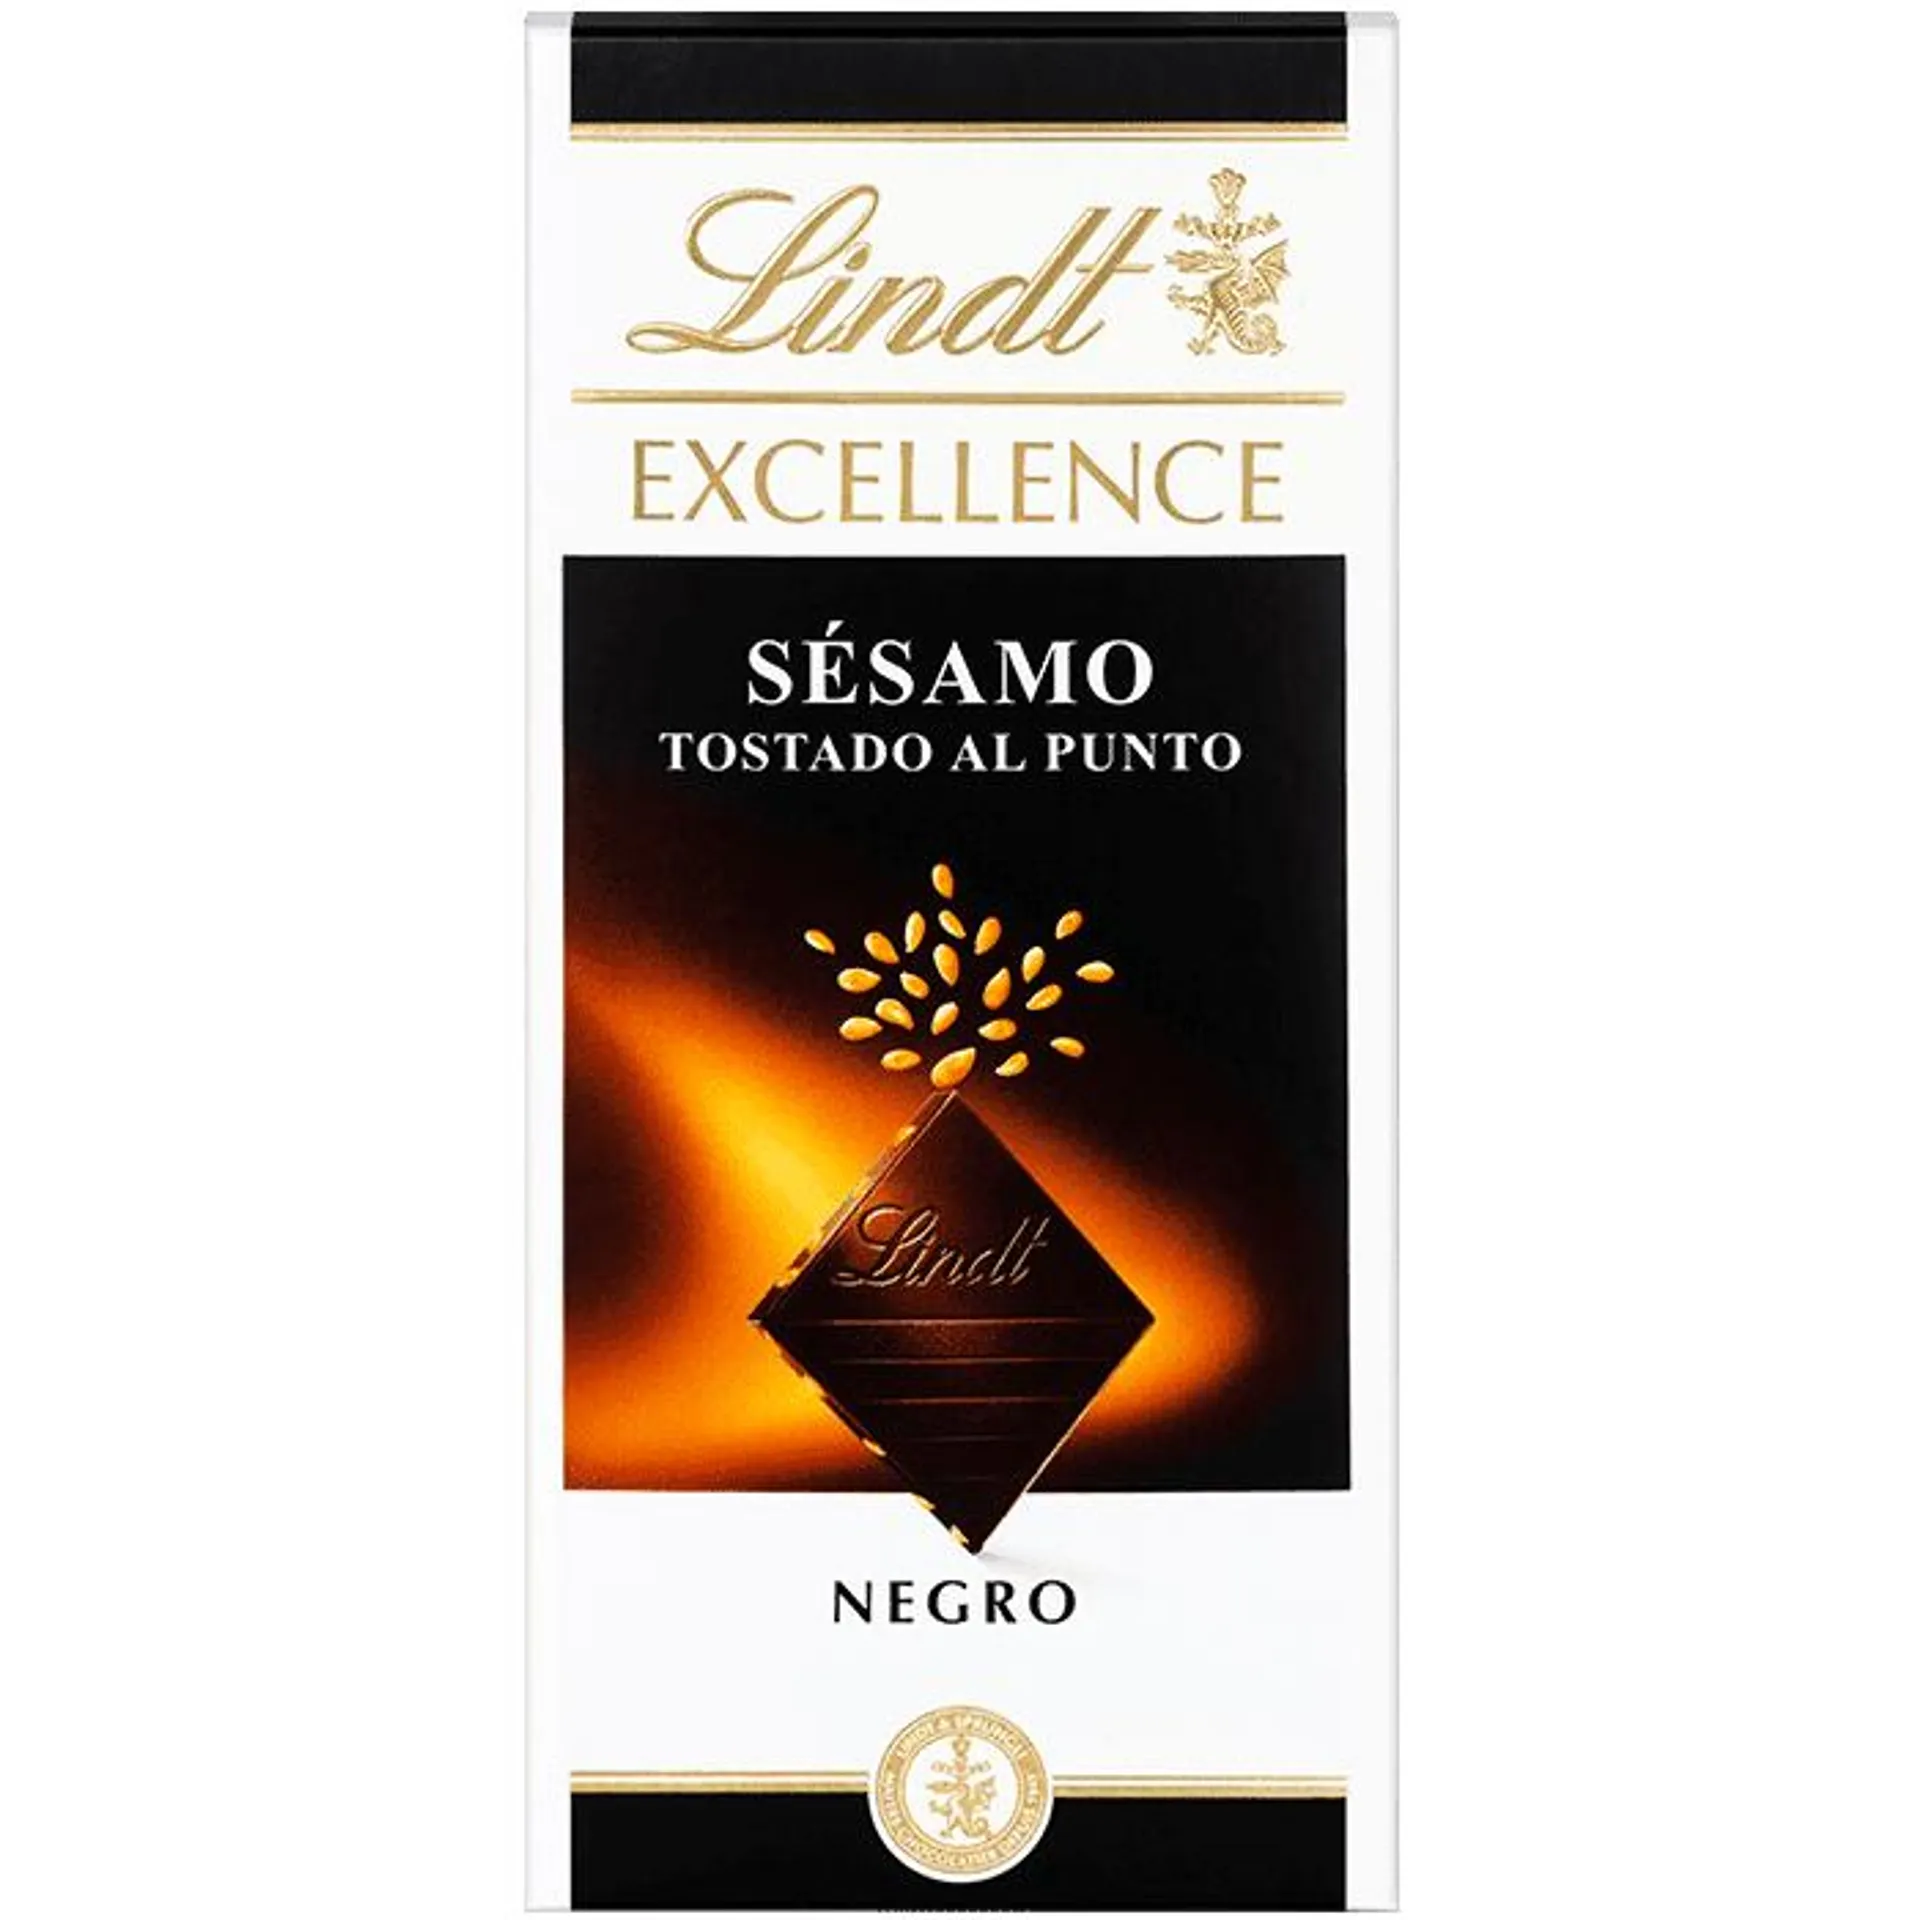 Tableta de Chocolate Excellence Sésamo100g - Lindt